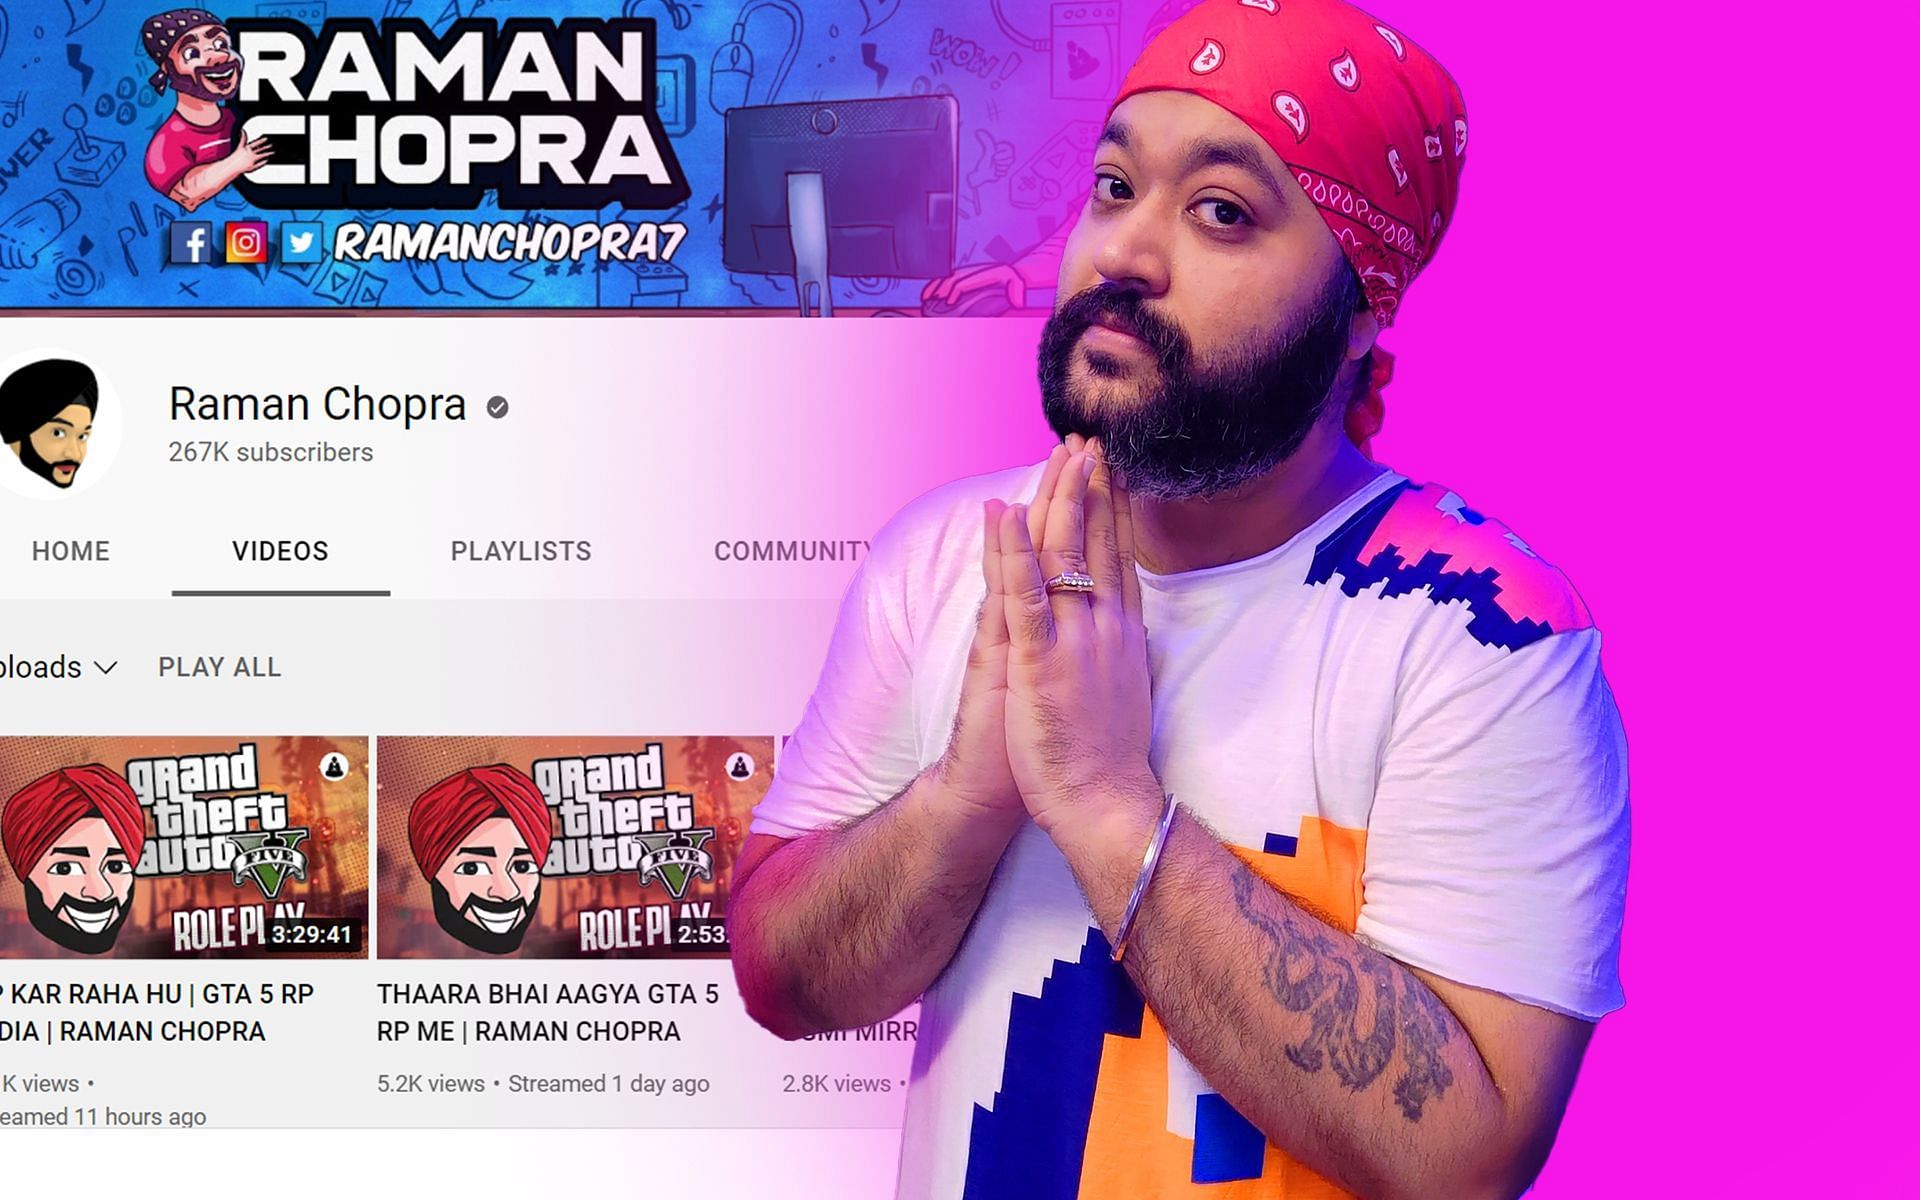 Raman Chopra has over 267K subscribers on YouTube (Image via Sportskeeda)